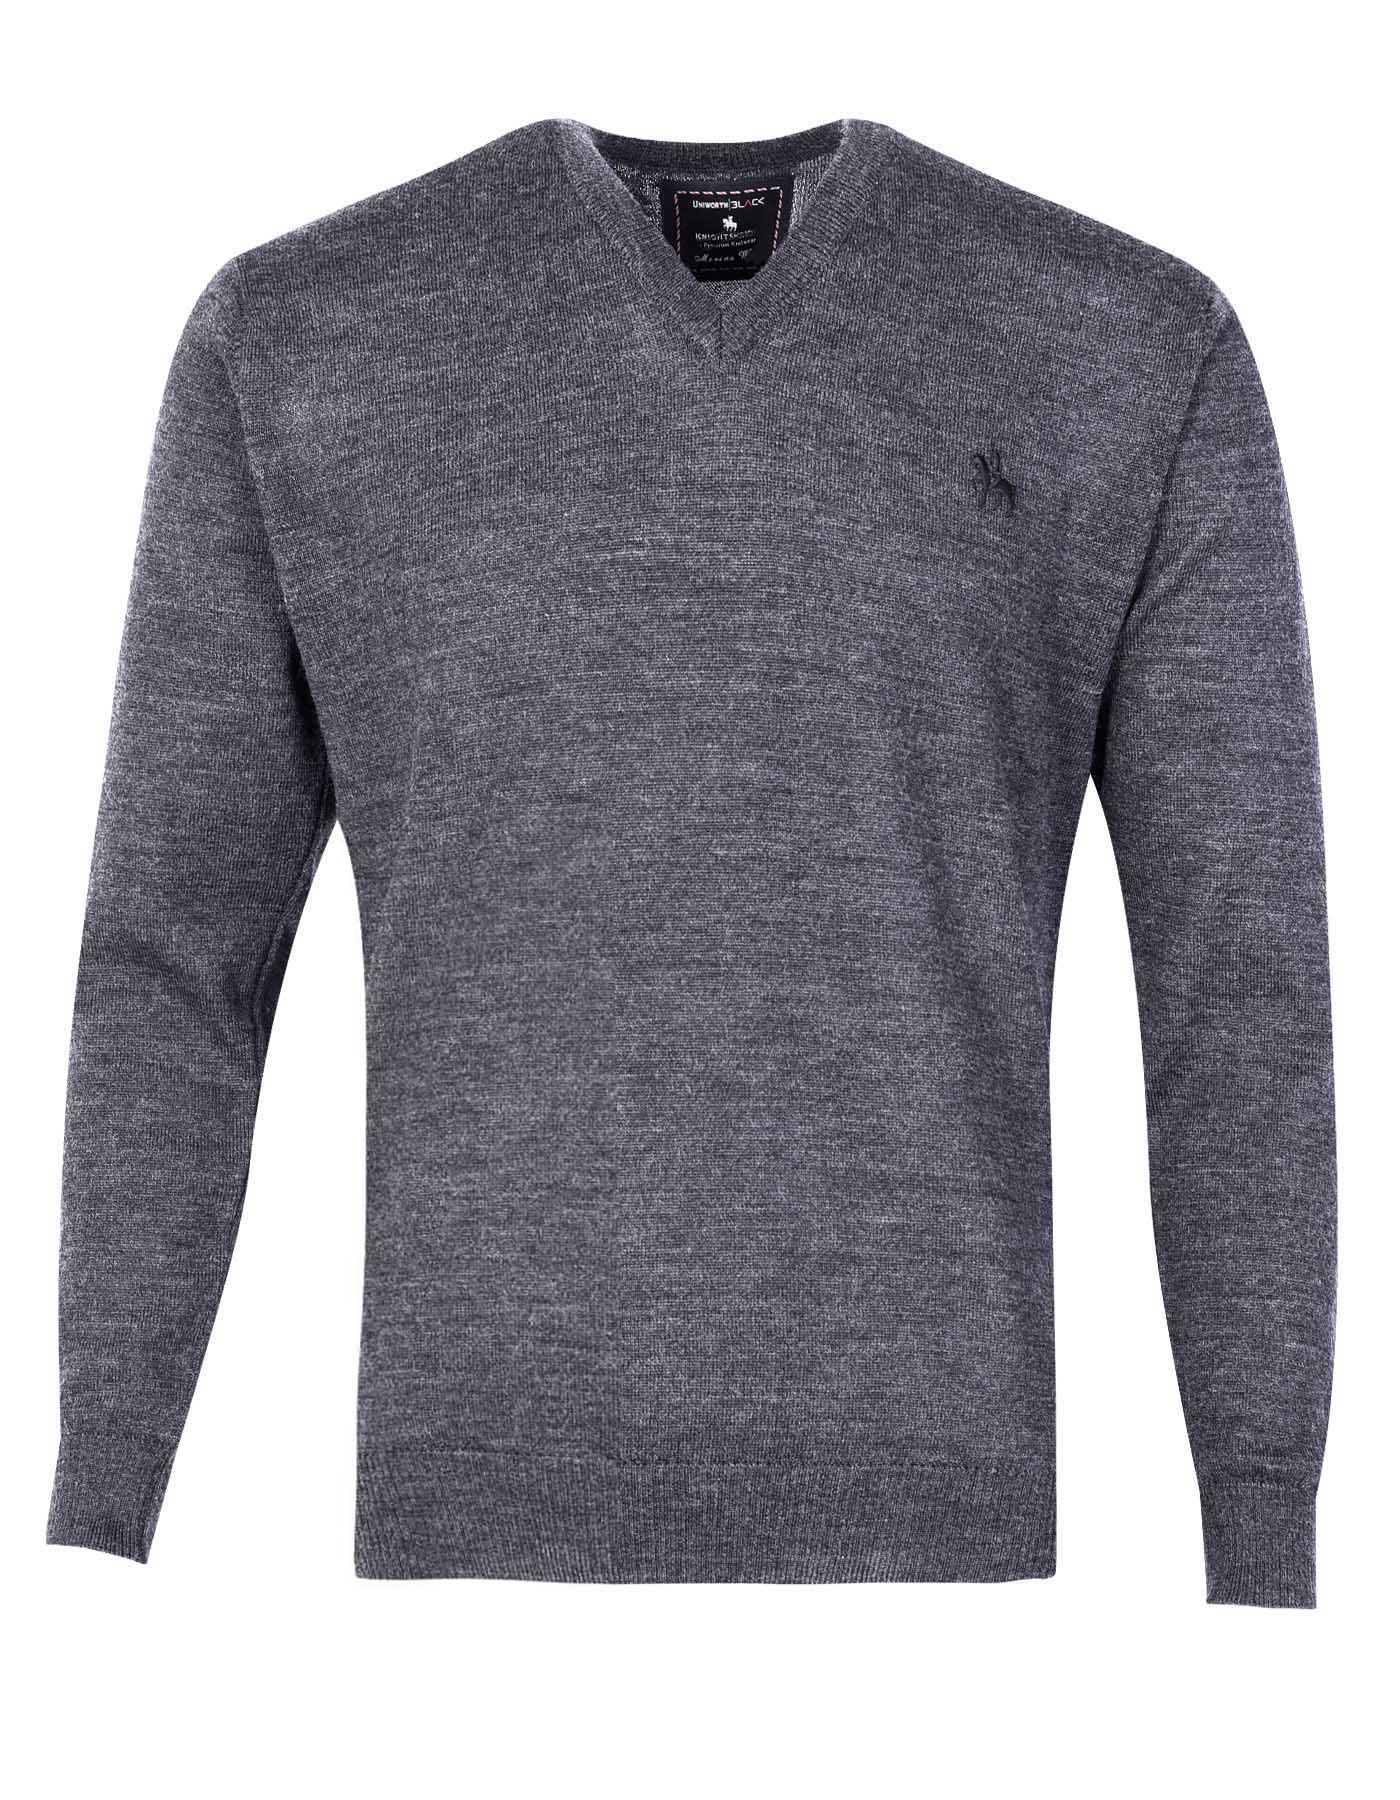 Charcoal Plain Full Sleeve Sweater